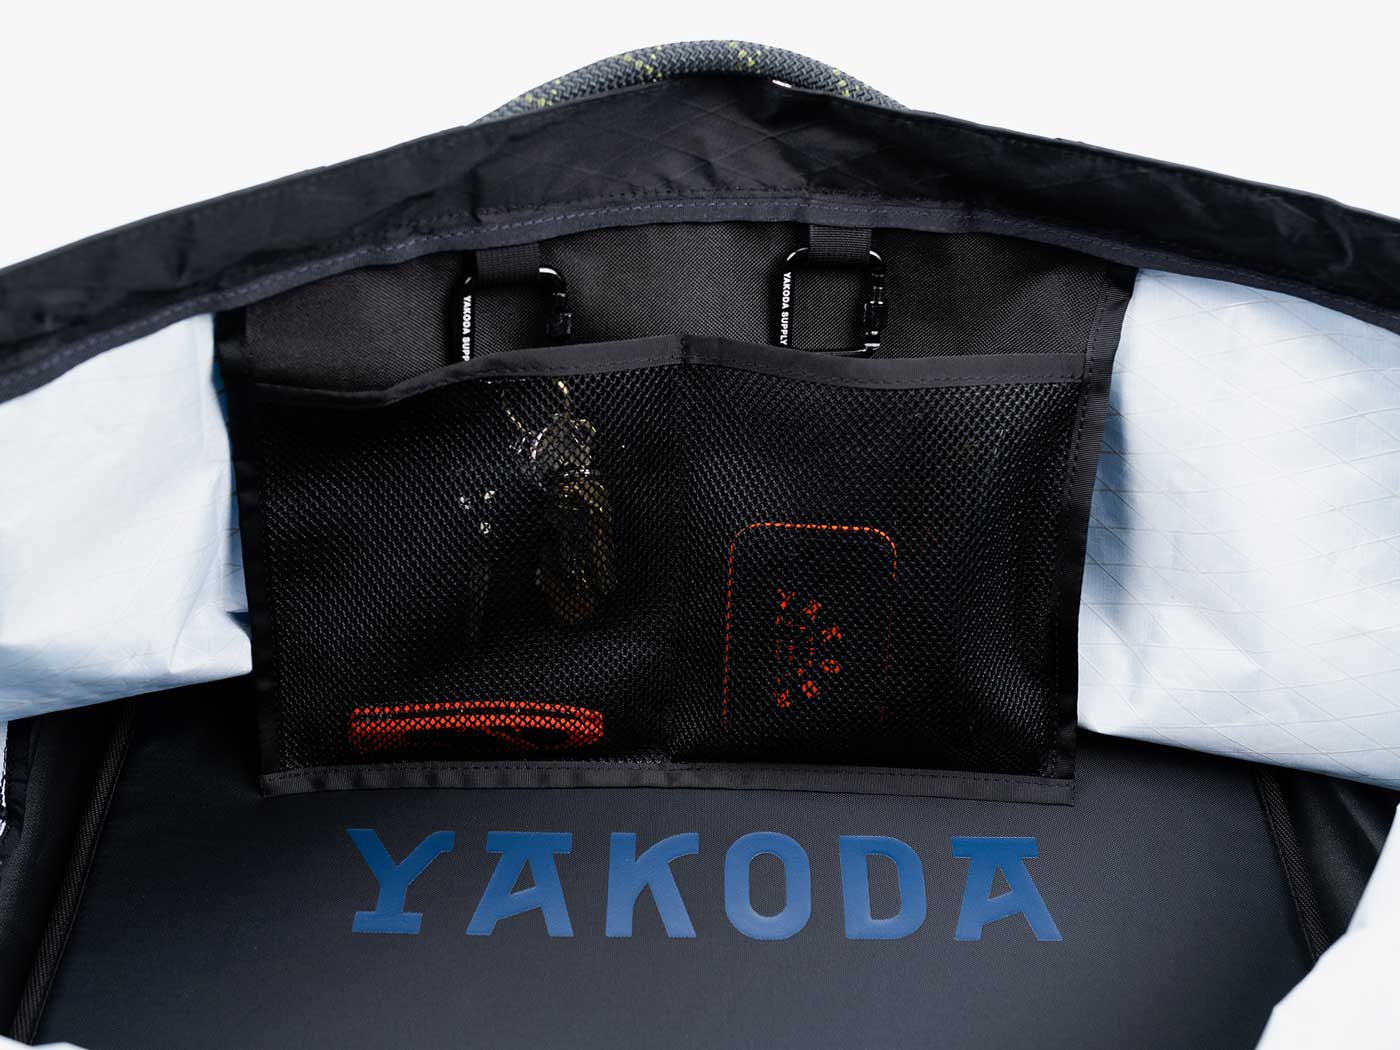 Yakoda Gear Transport